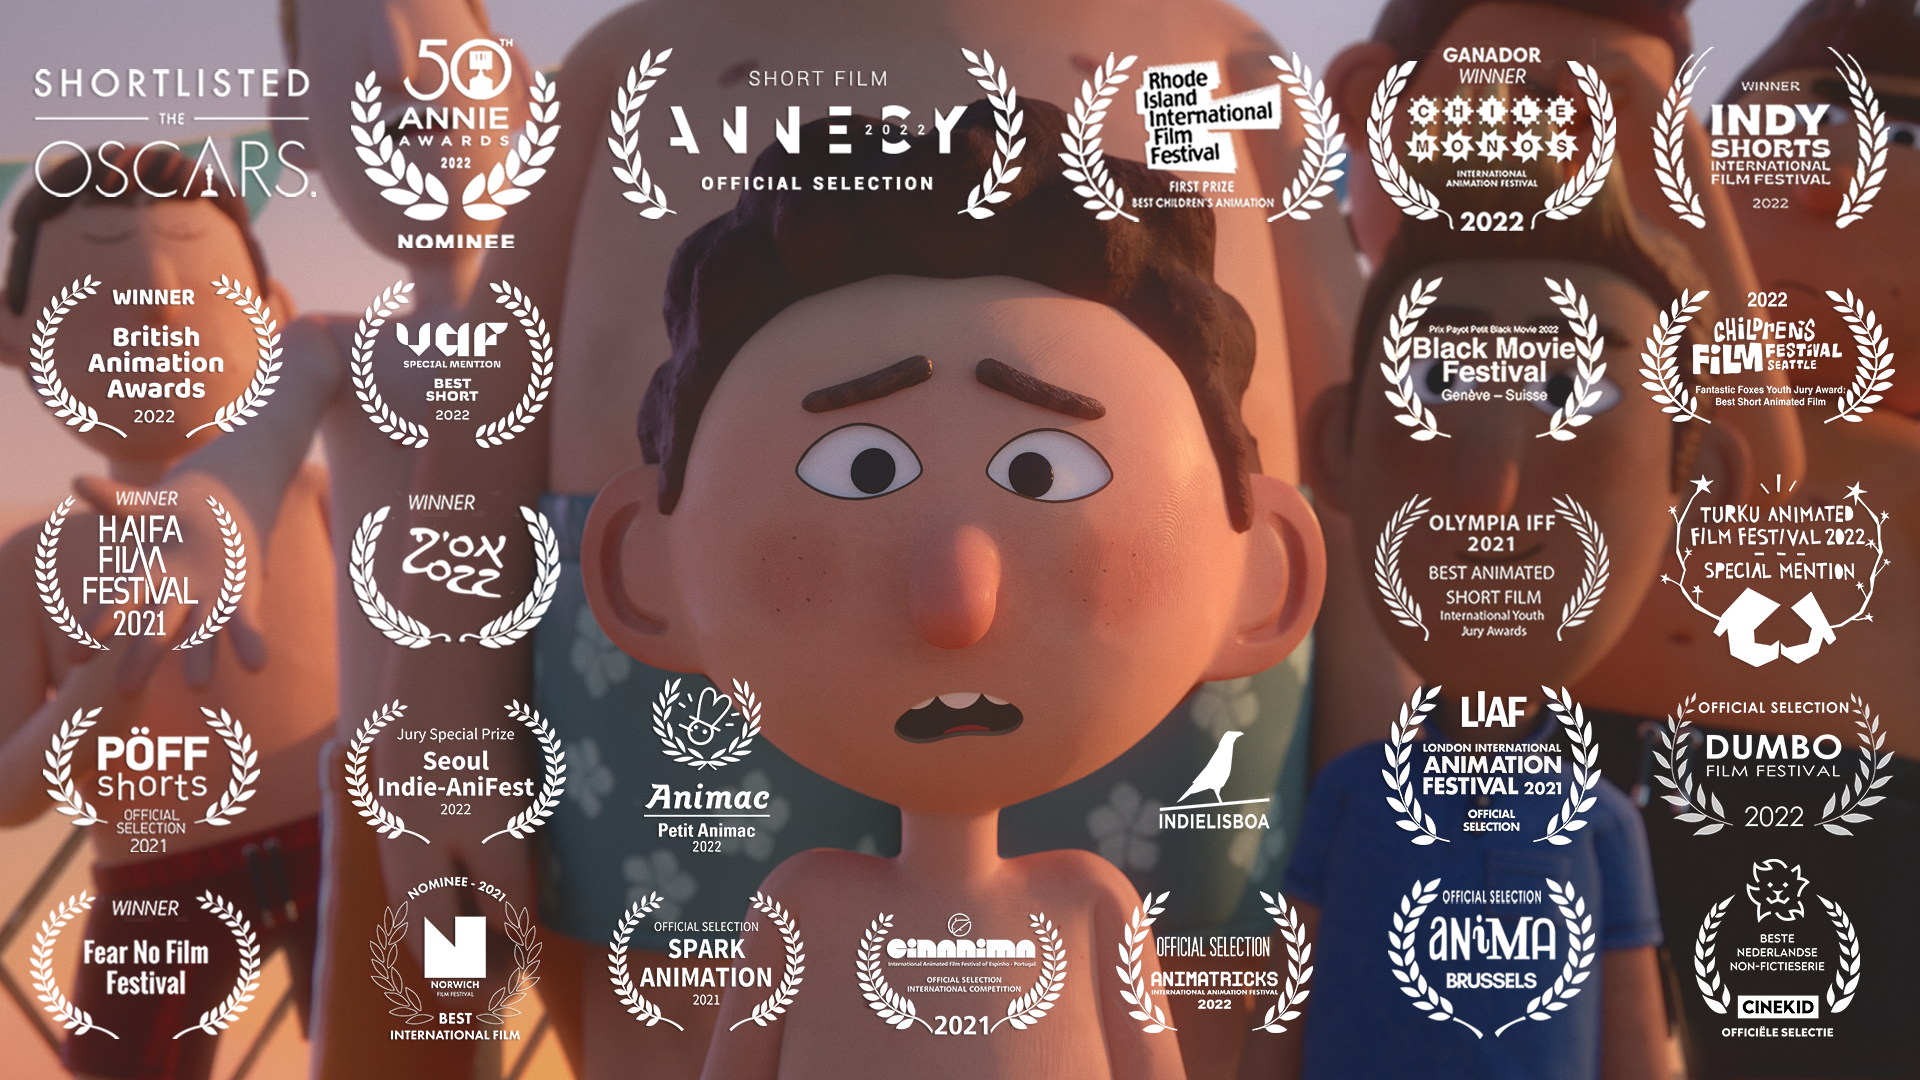 Icelandic animation nominated for Best Animated Short Film in 2021 Oscars